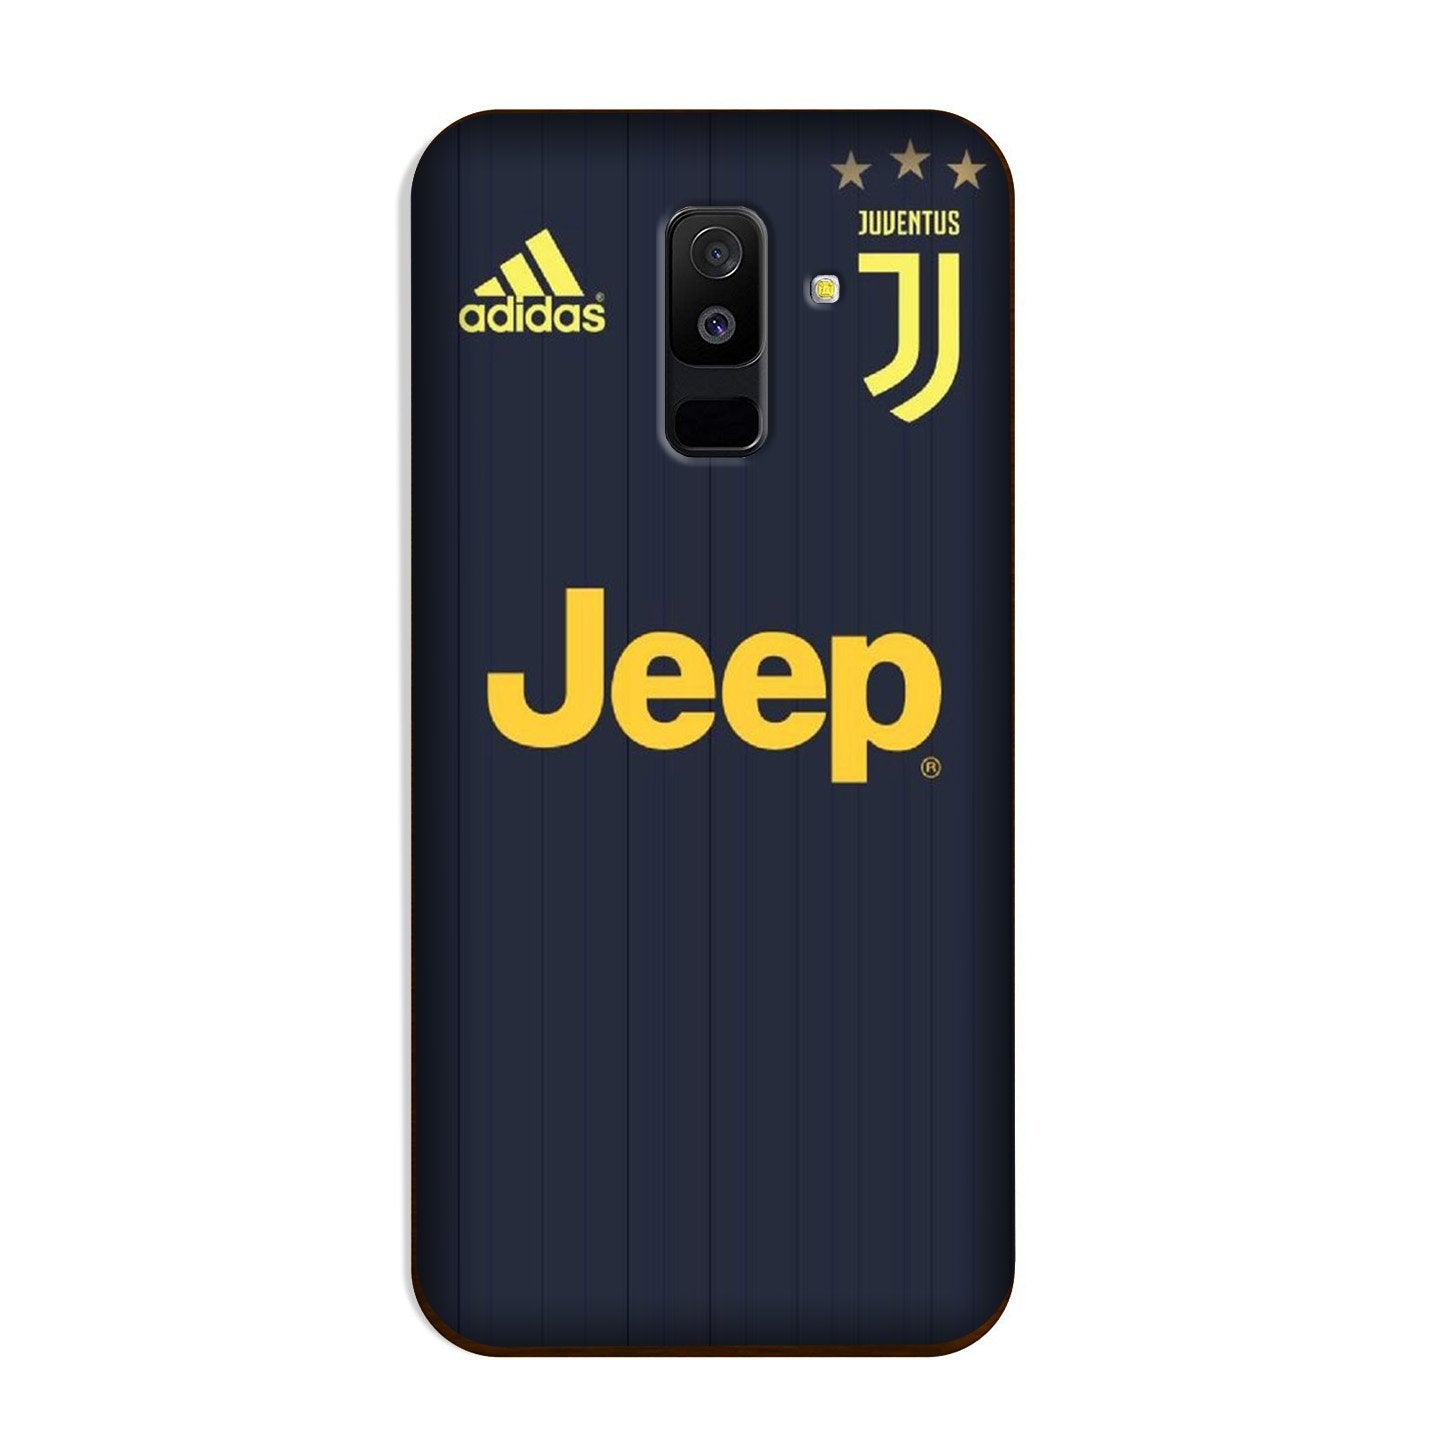 Jeep Juventus Case for Galaxy A6 Plus(Design - 161)